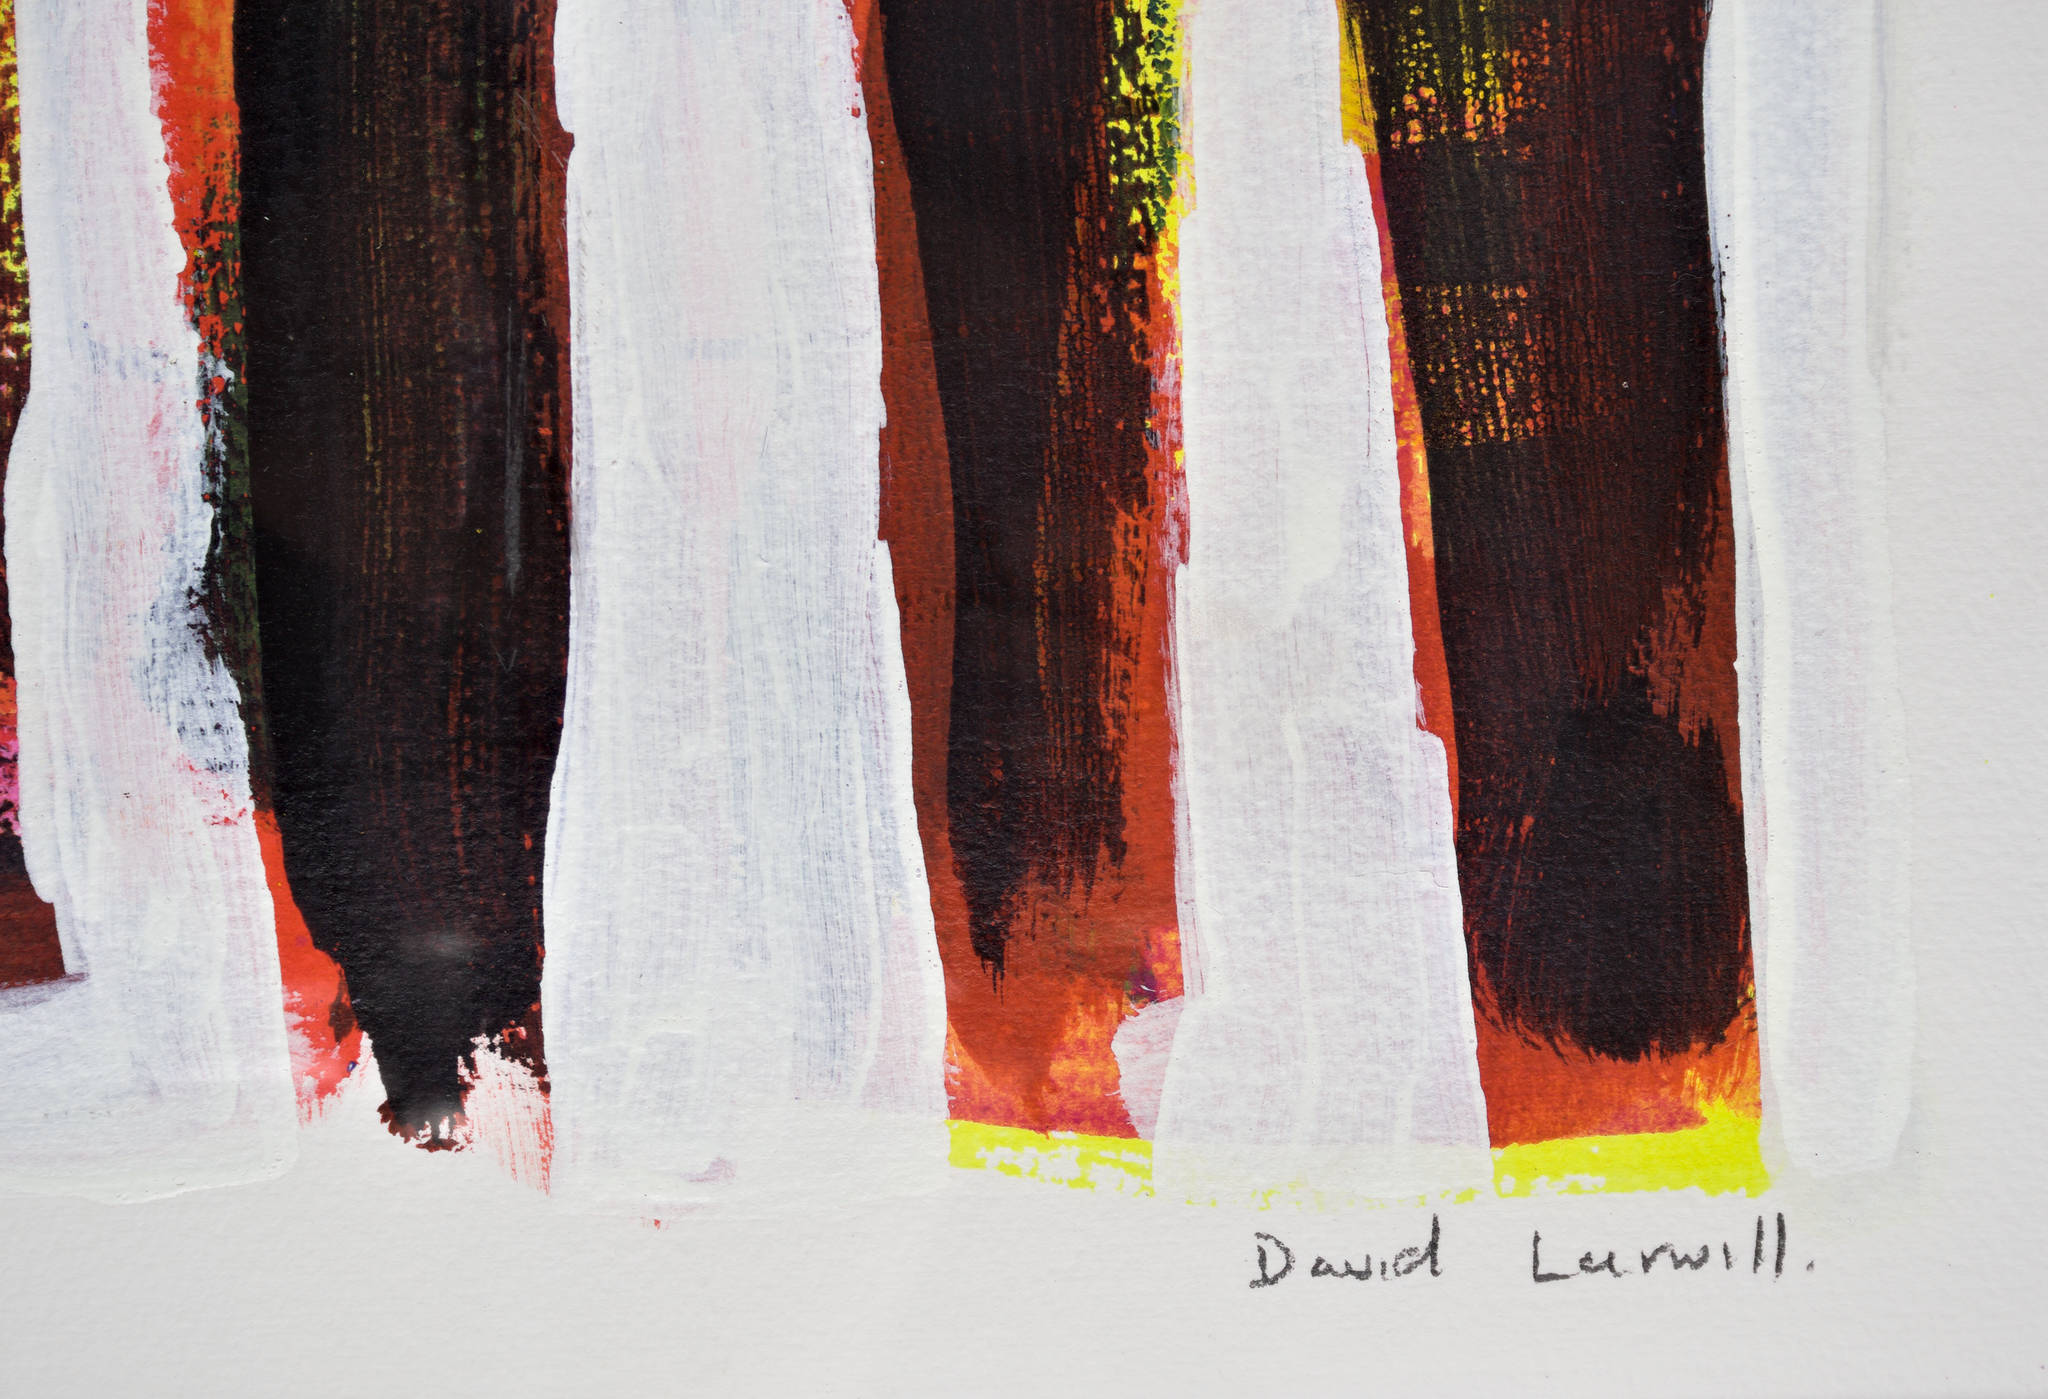 David Larwill 'House'